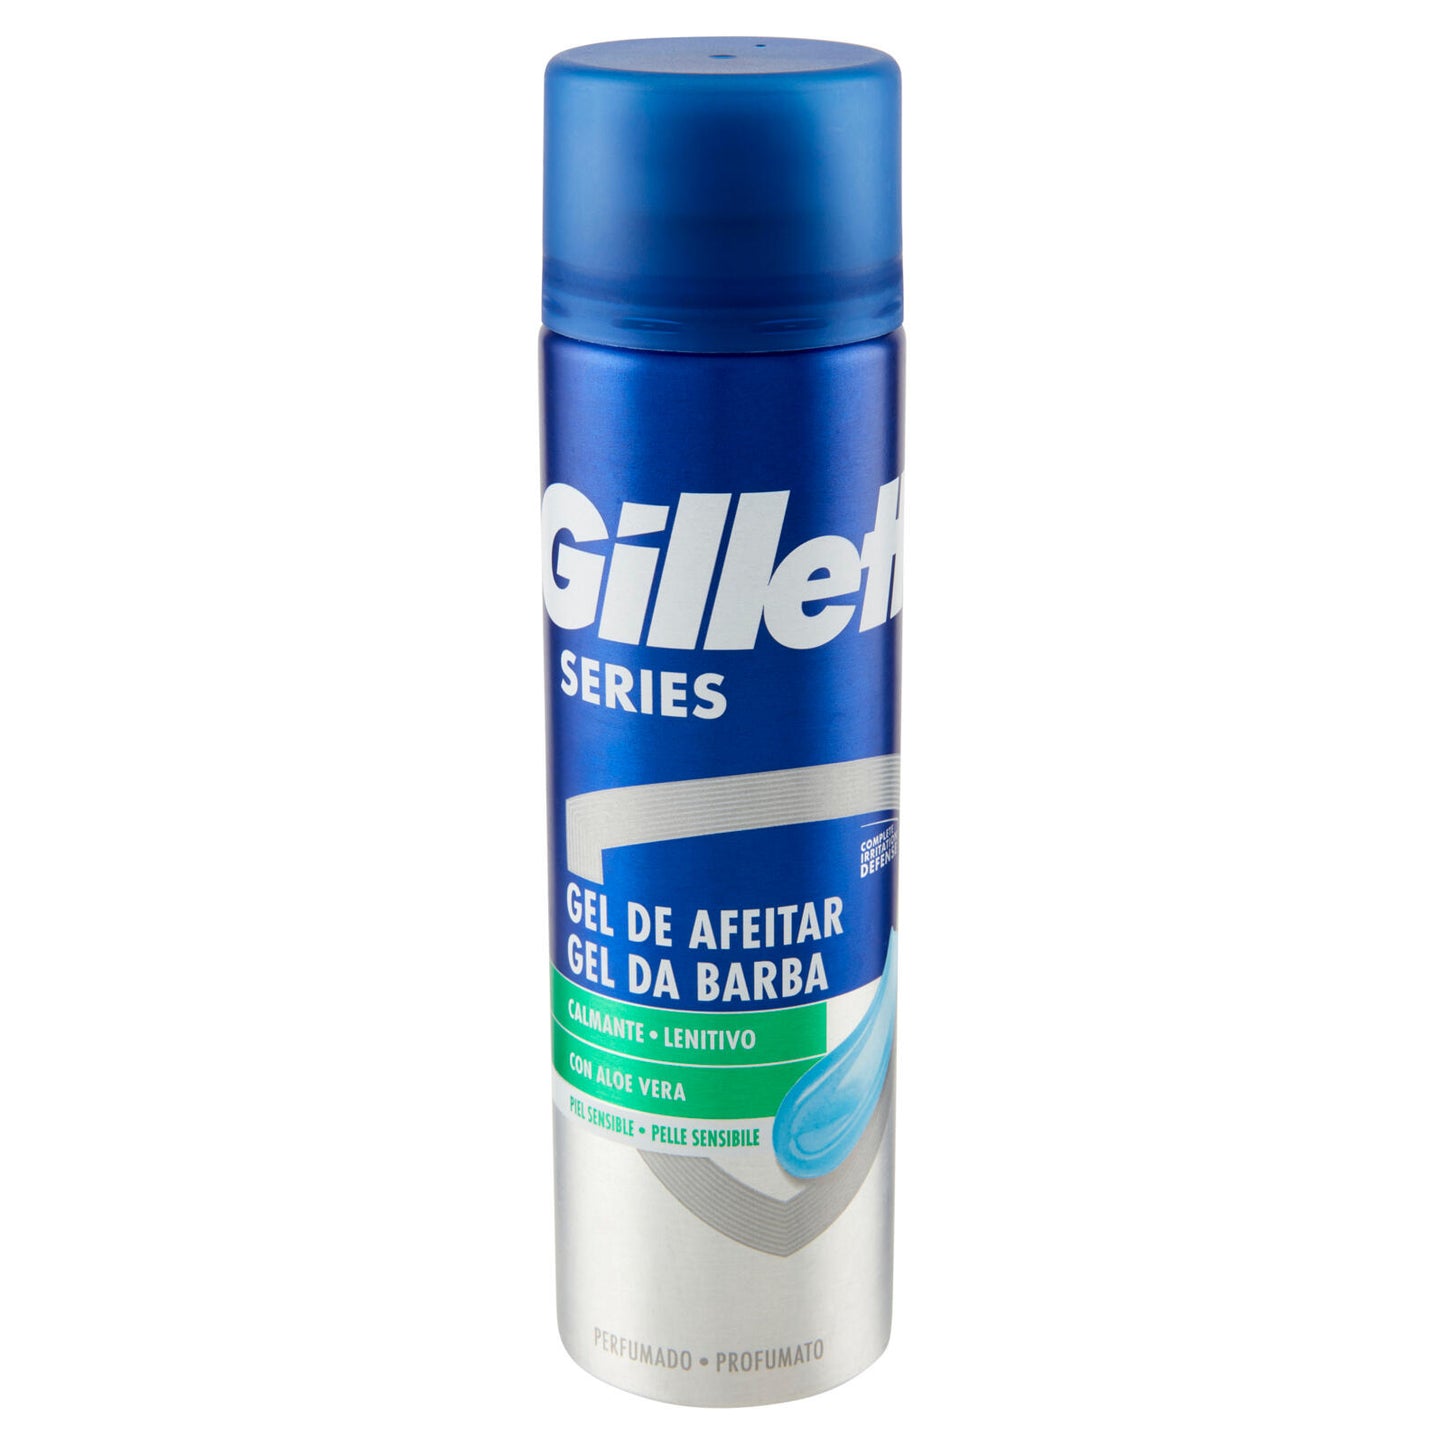 Gillette Series Gel da Barba Lenitivo, 200ml